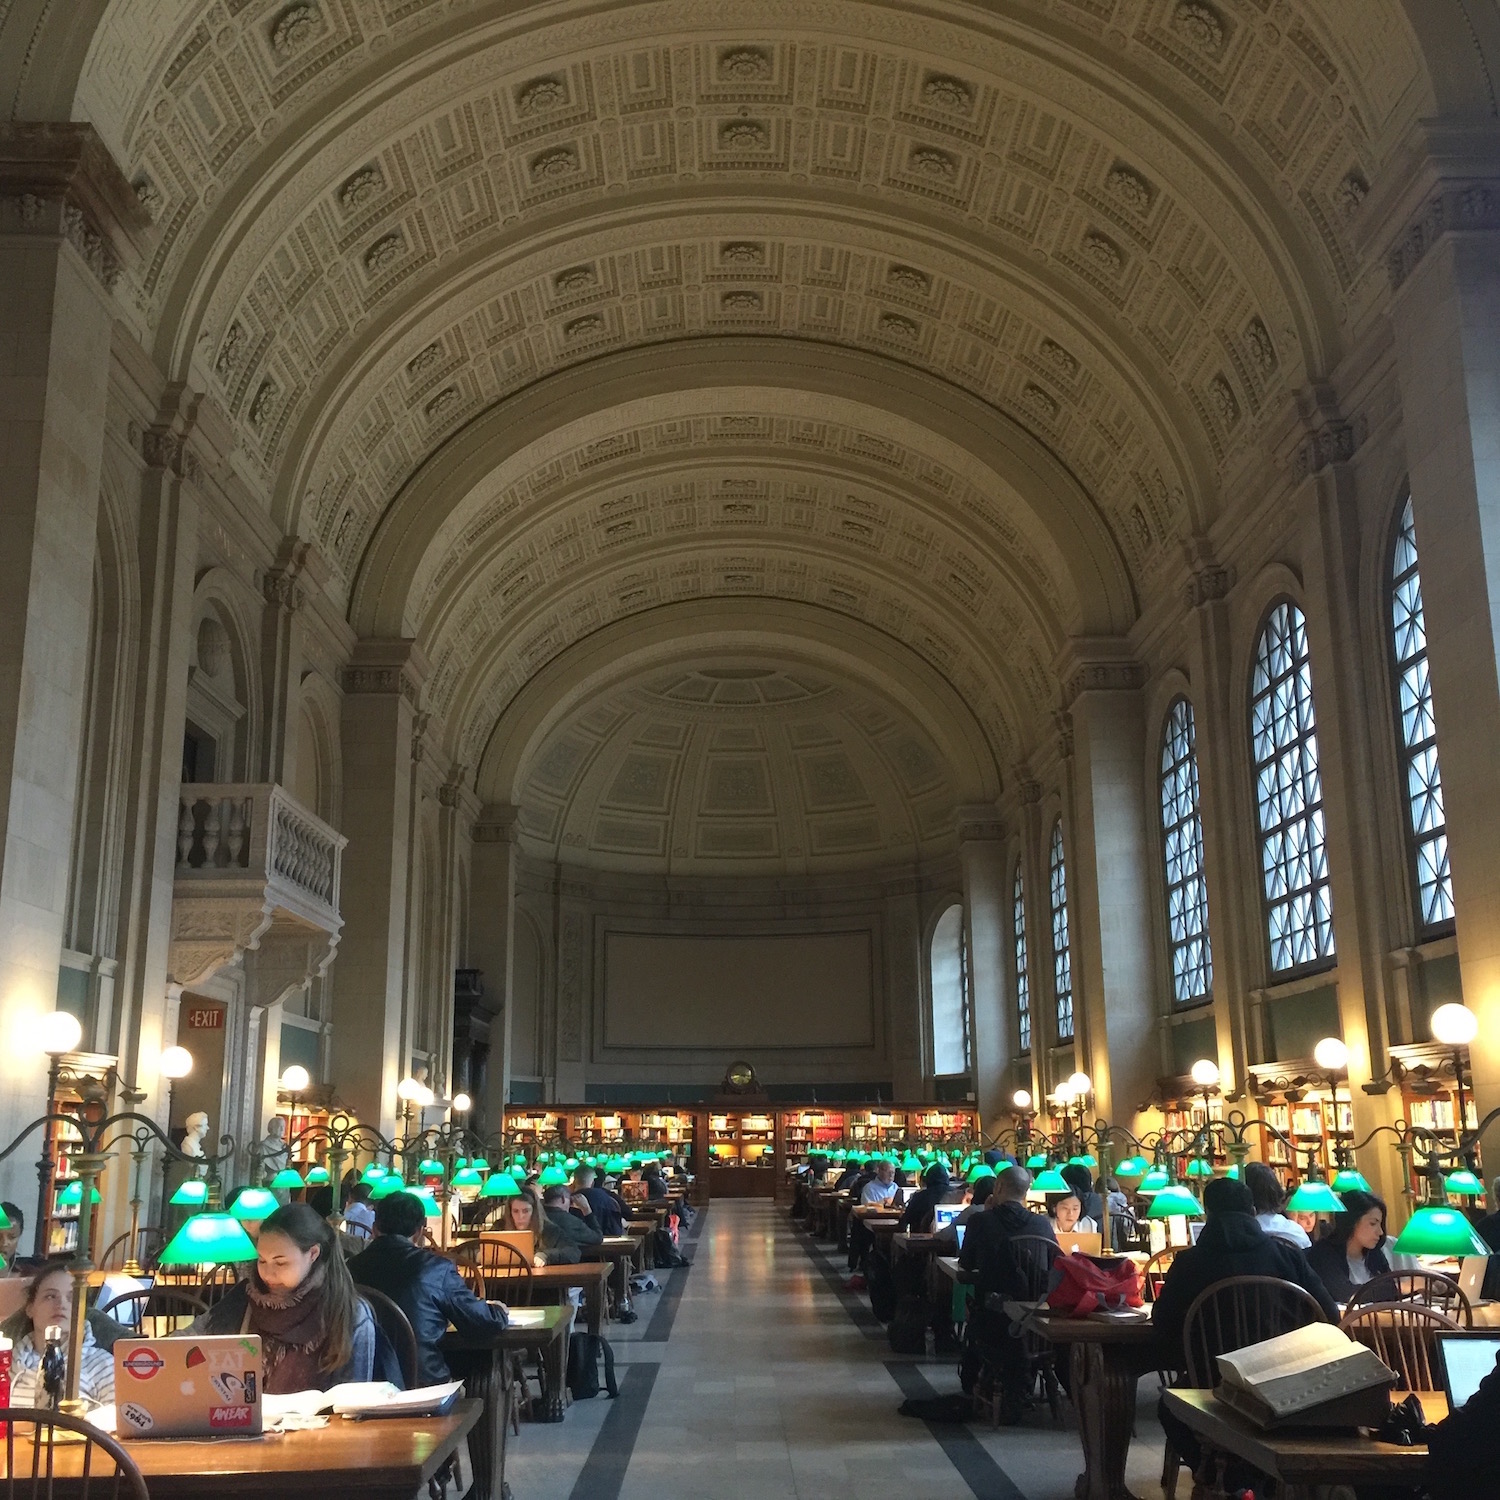 Boston Public Library Reading Room